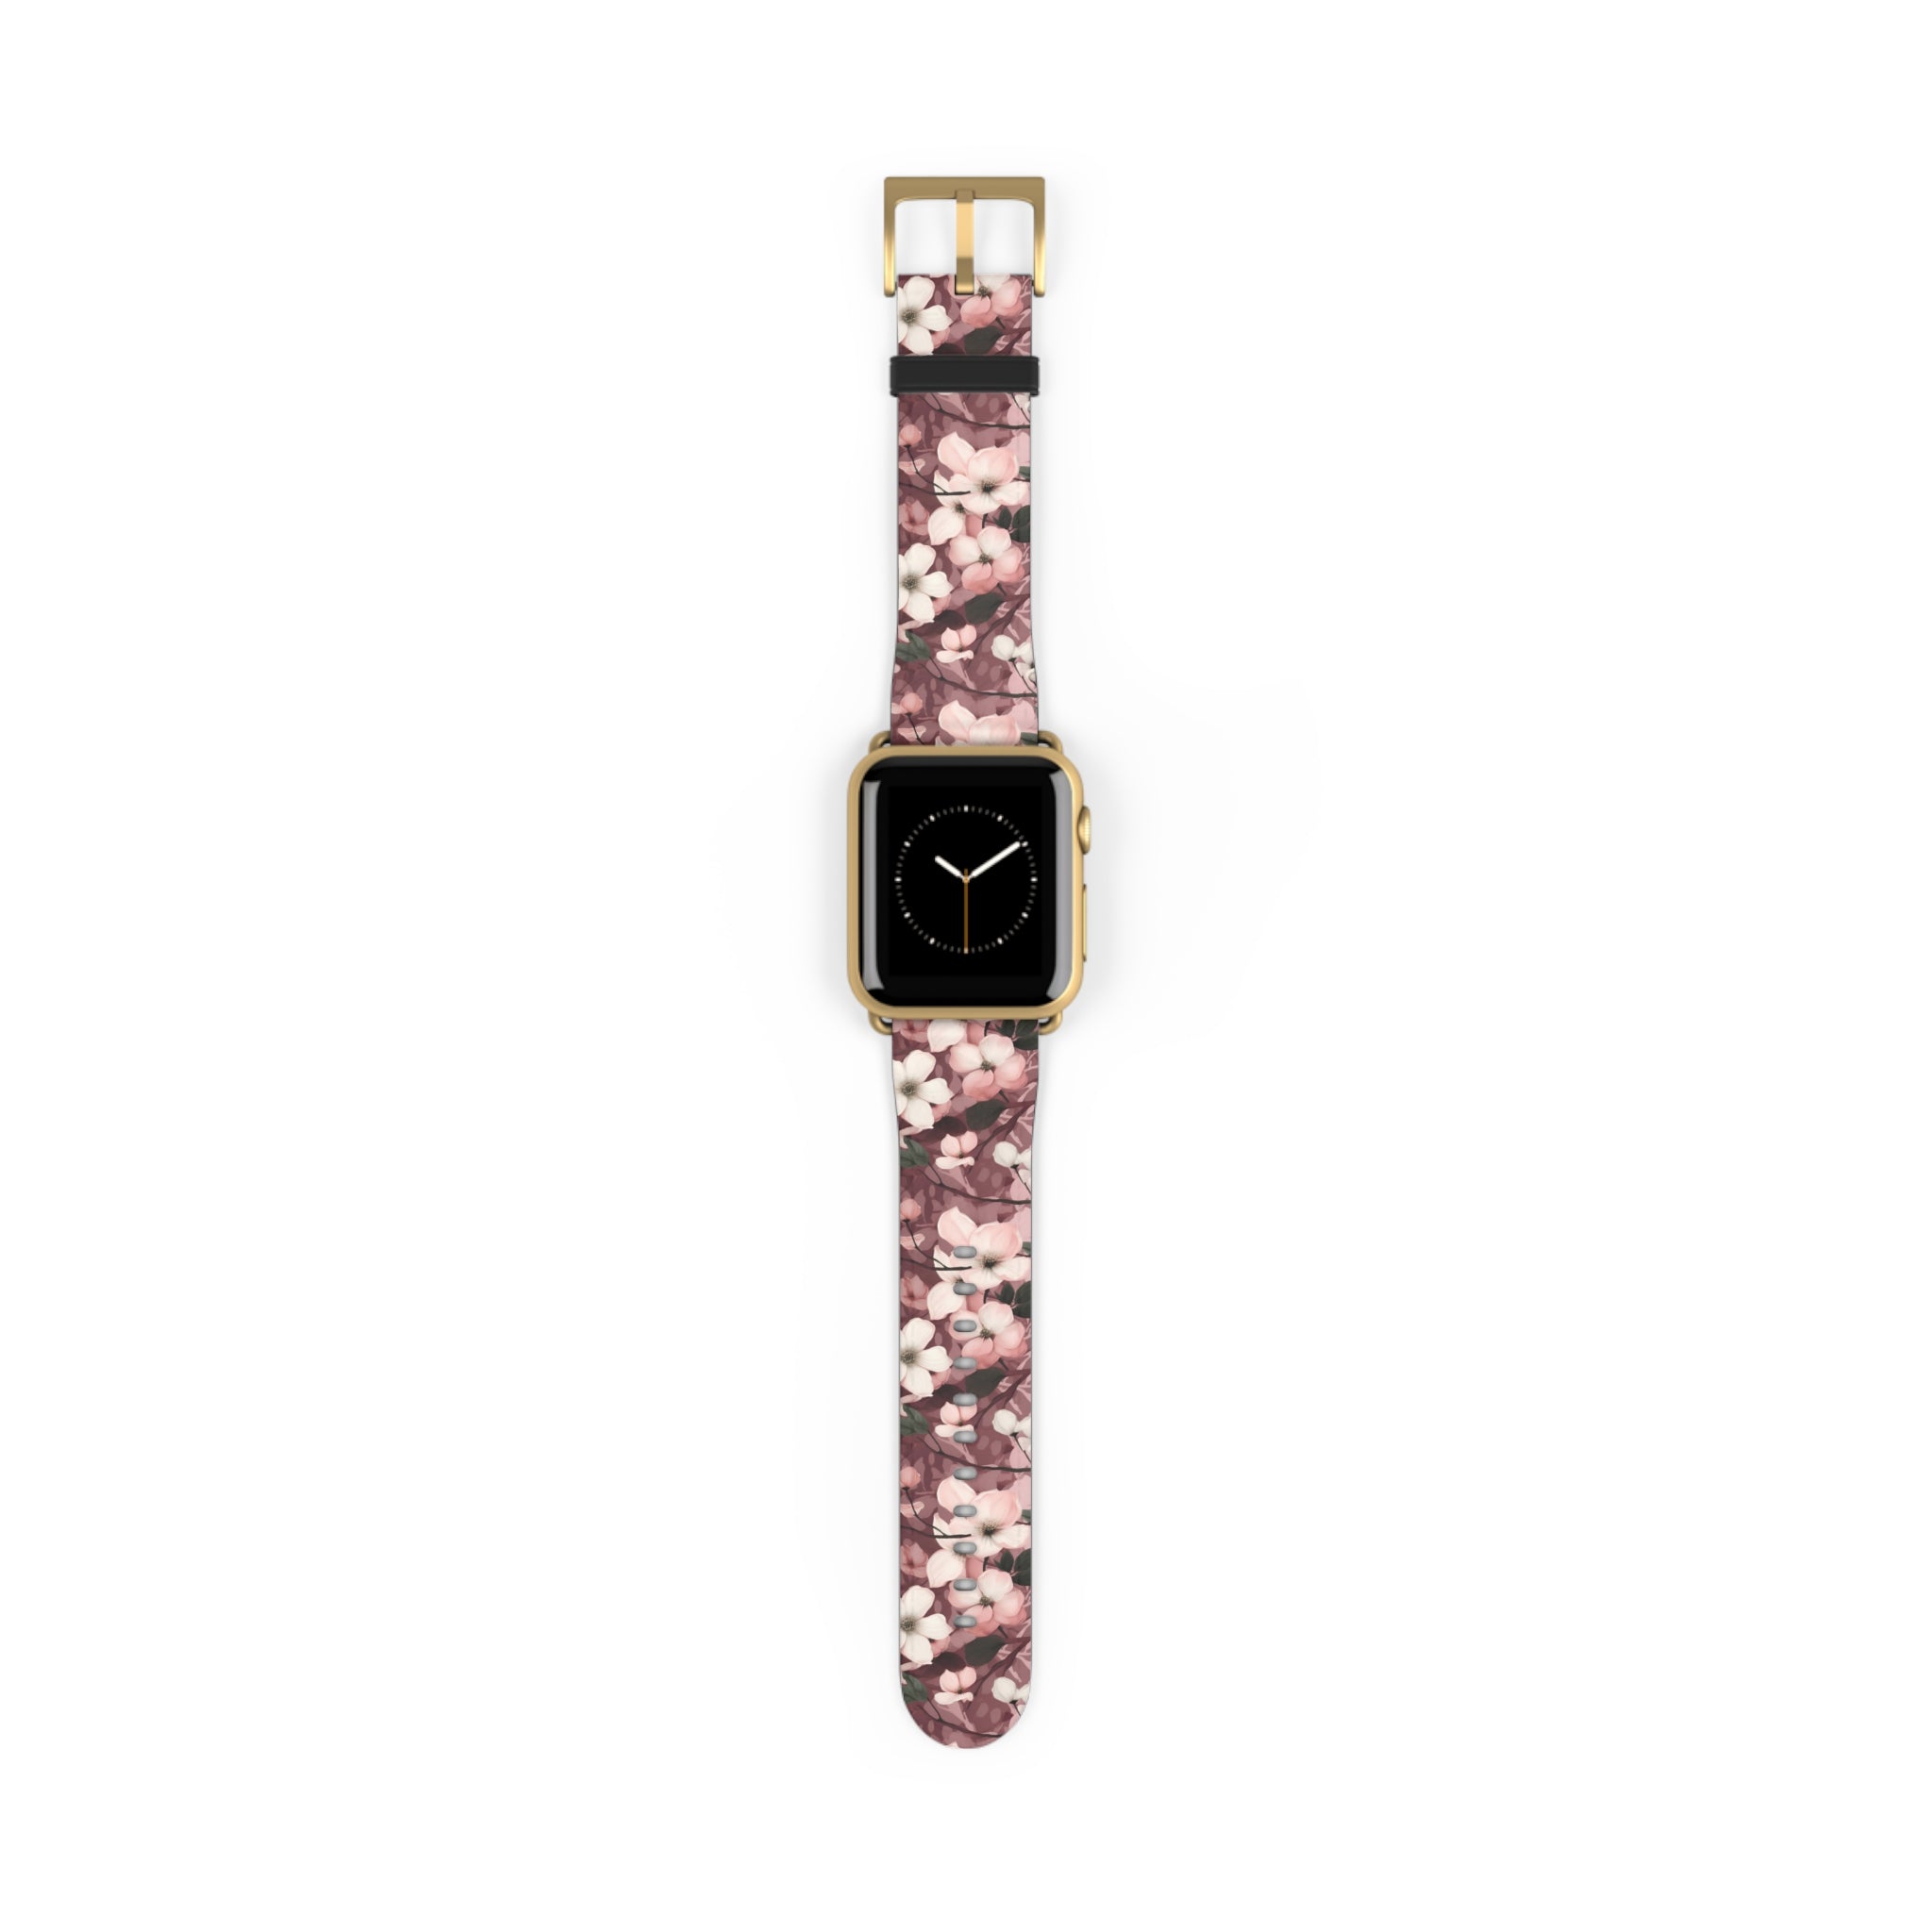 Sparse Dogwood Blossoms - Elegant Floral Design - Apple Watch Strap - Pattern Symphony